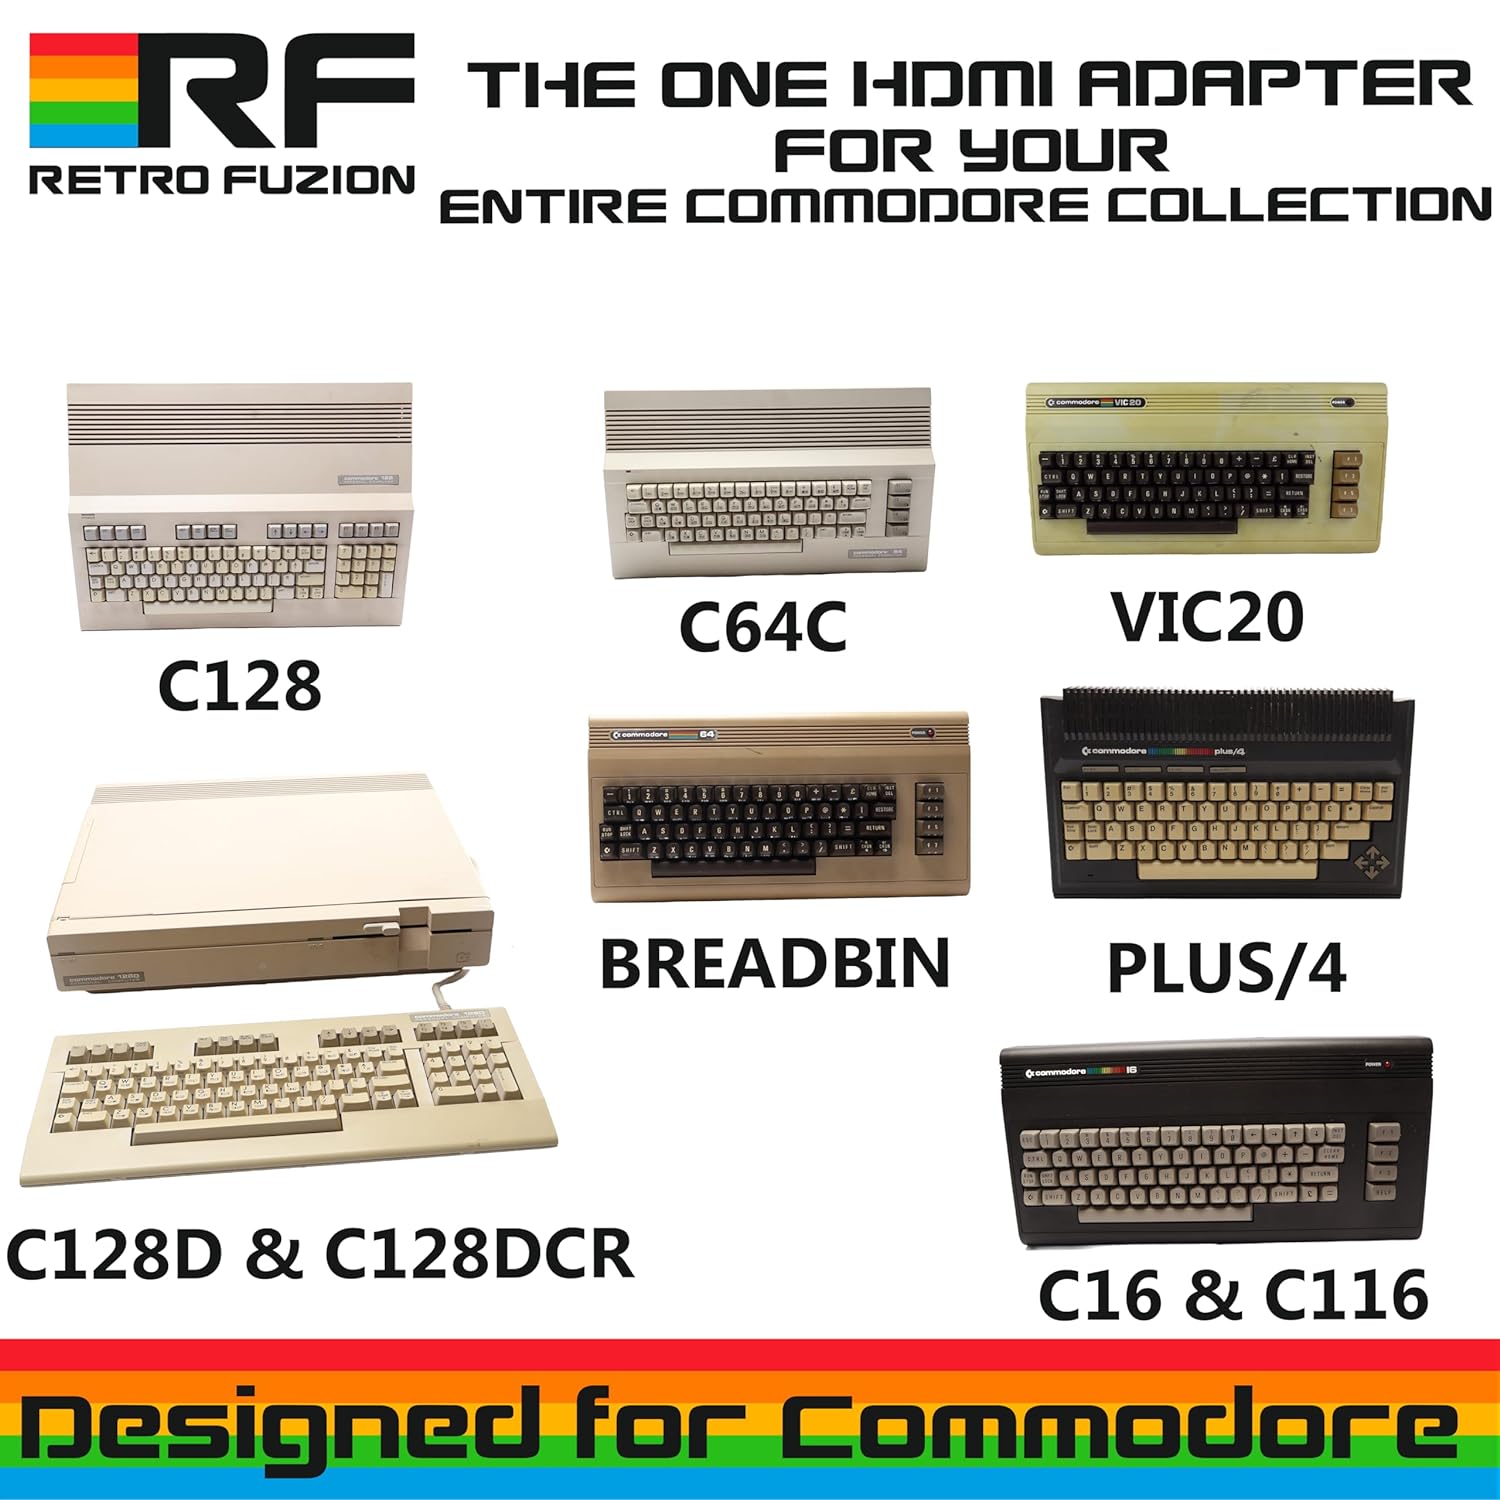 C64 2 HDMI Adapter